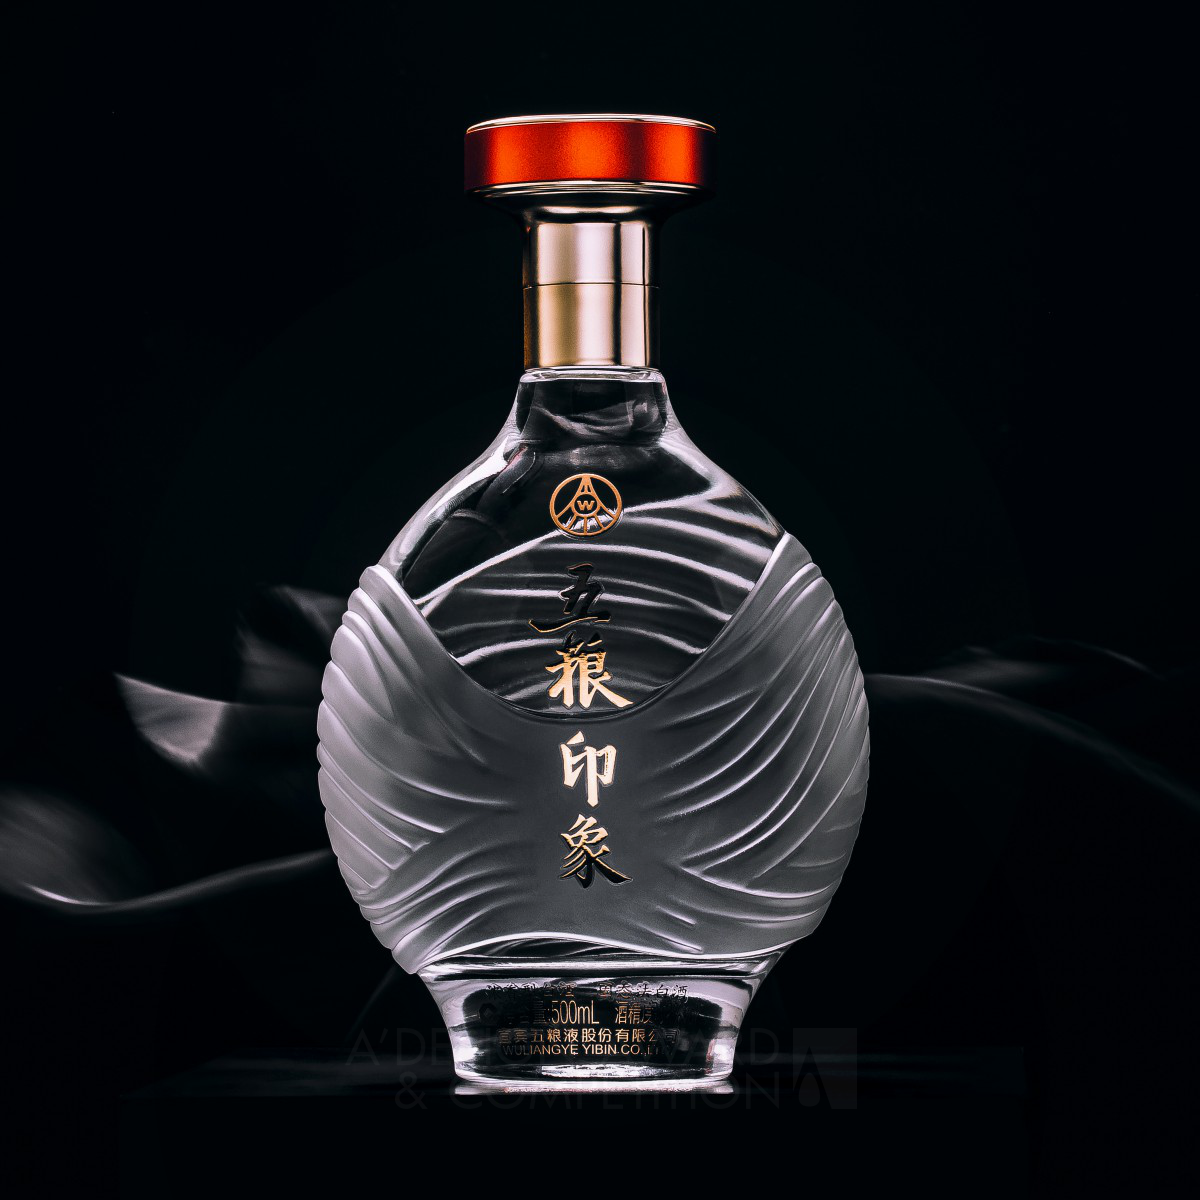 Wuliang Image Liquor Packaging by Luo Heng